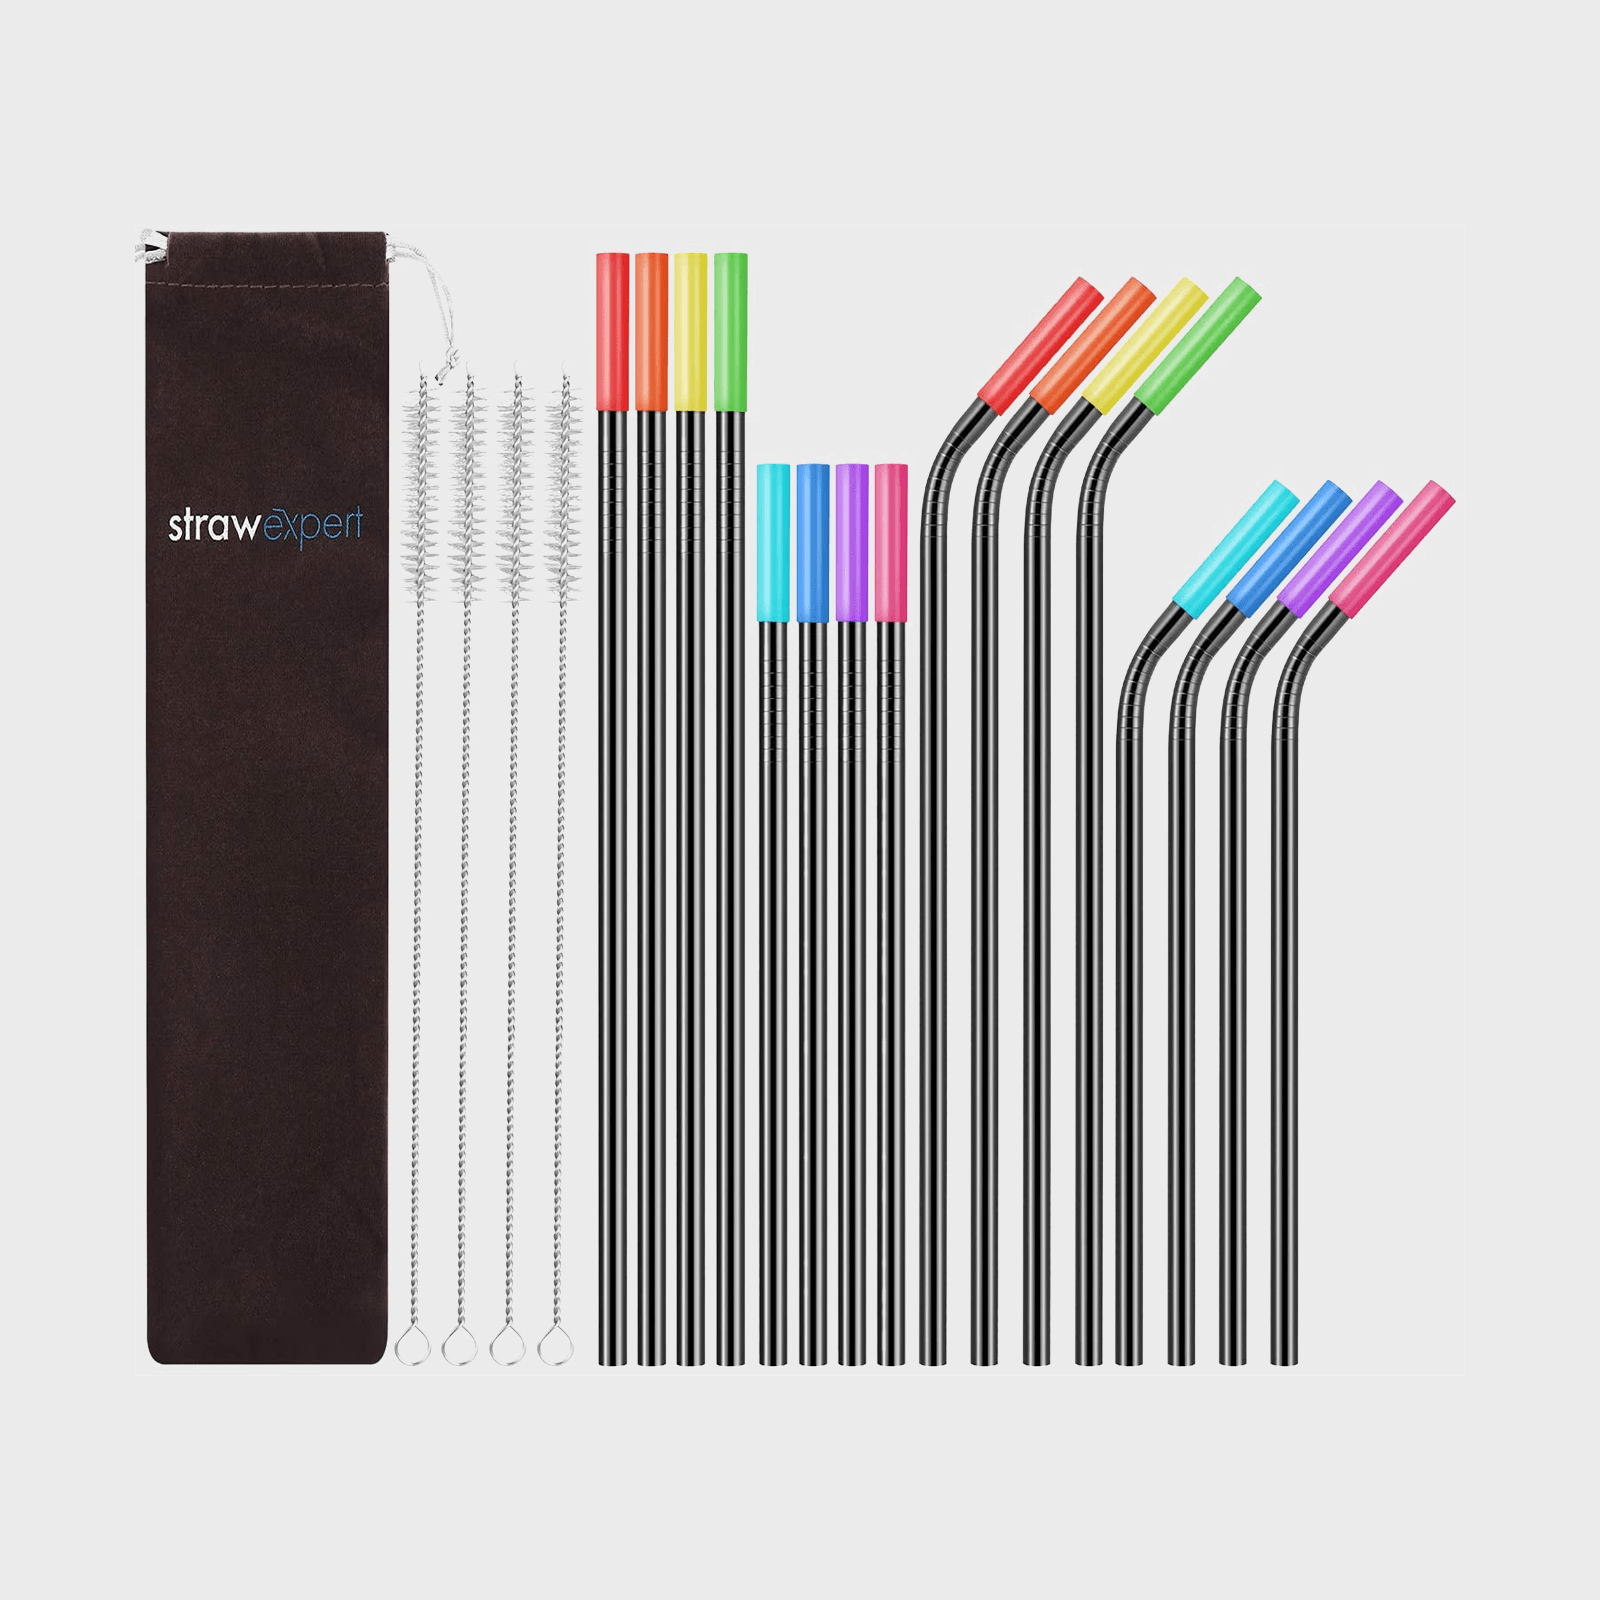 https://www.rd.com/wp-content/uploads/2022/05/strawexpert-16-pack-black-reusable-metal-straws-rainbow-tip-ecomm-via-amazon.png?fit=700%2C700